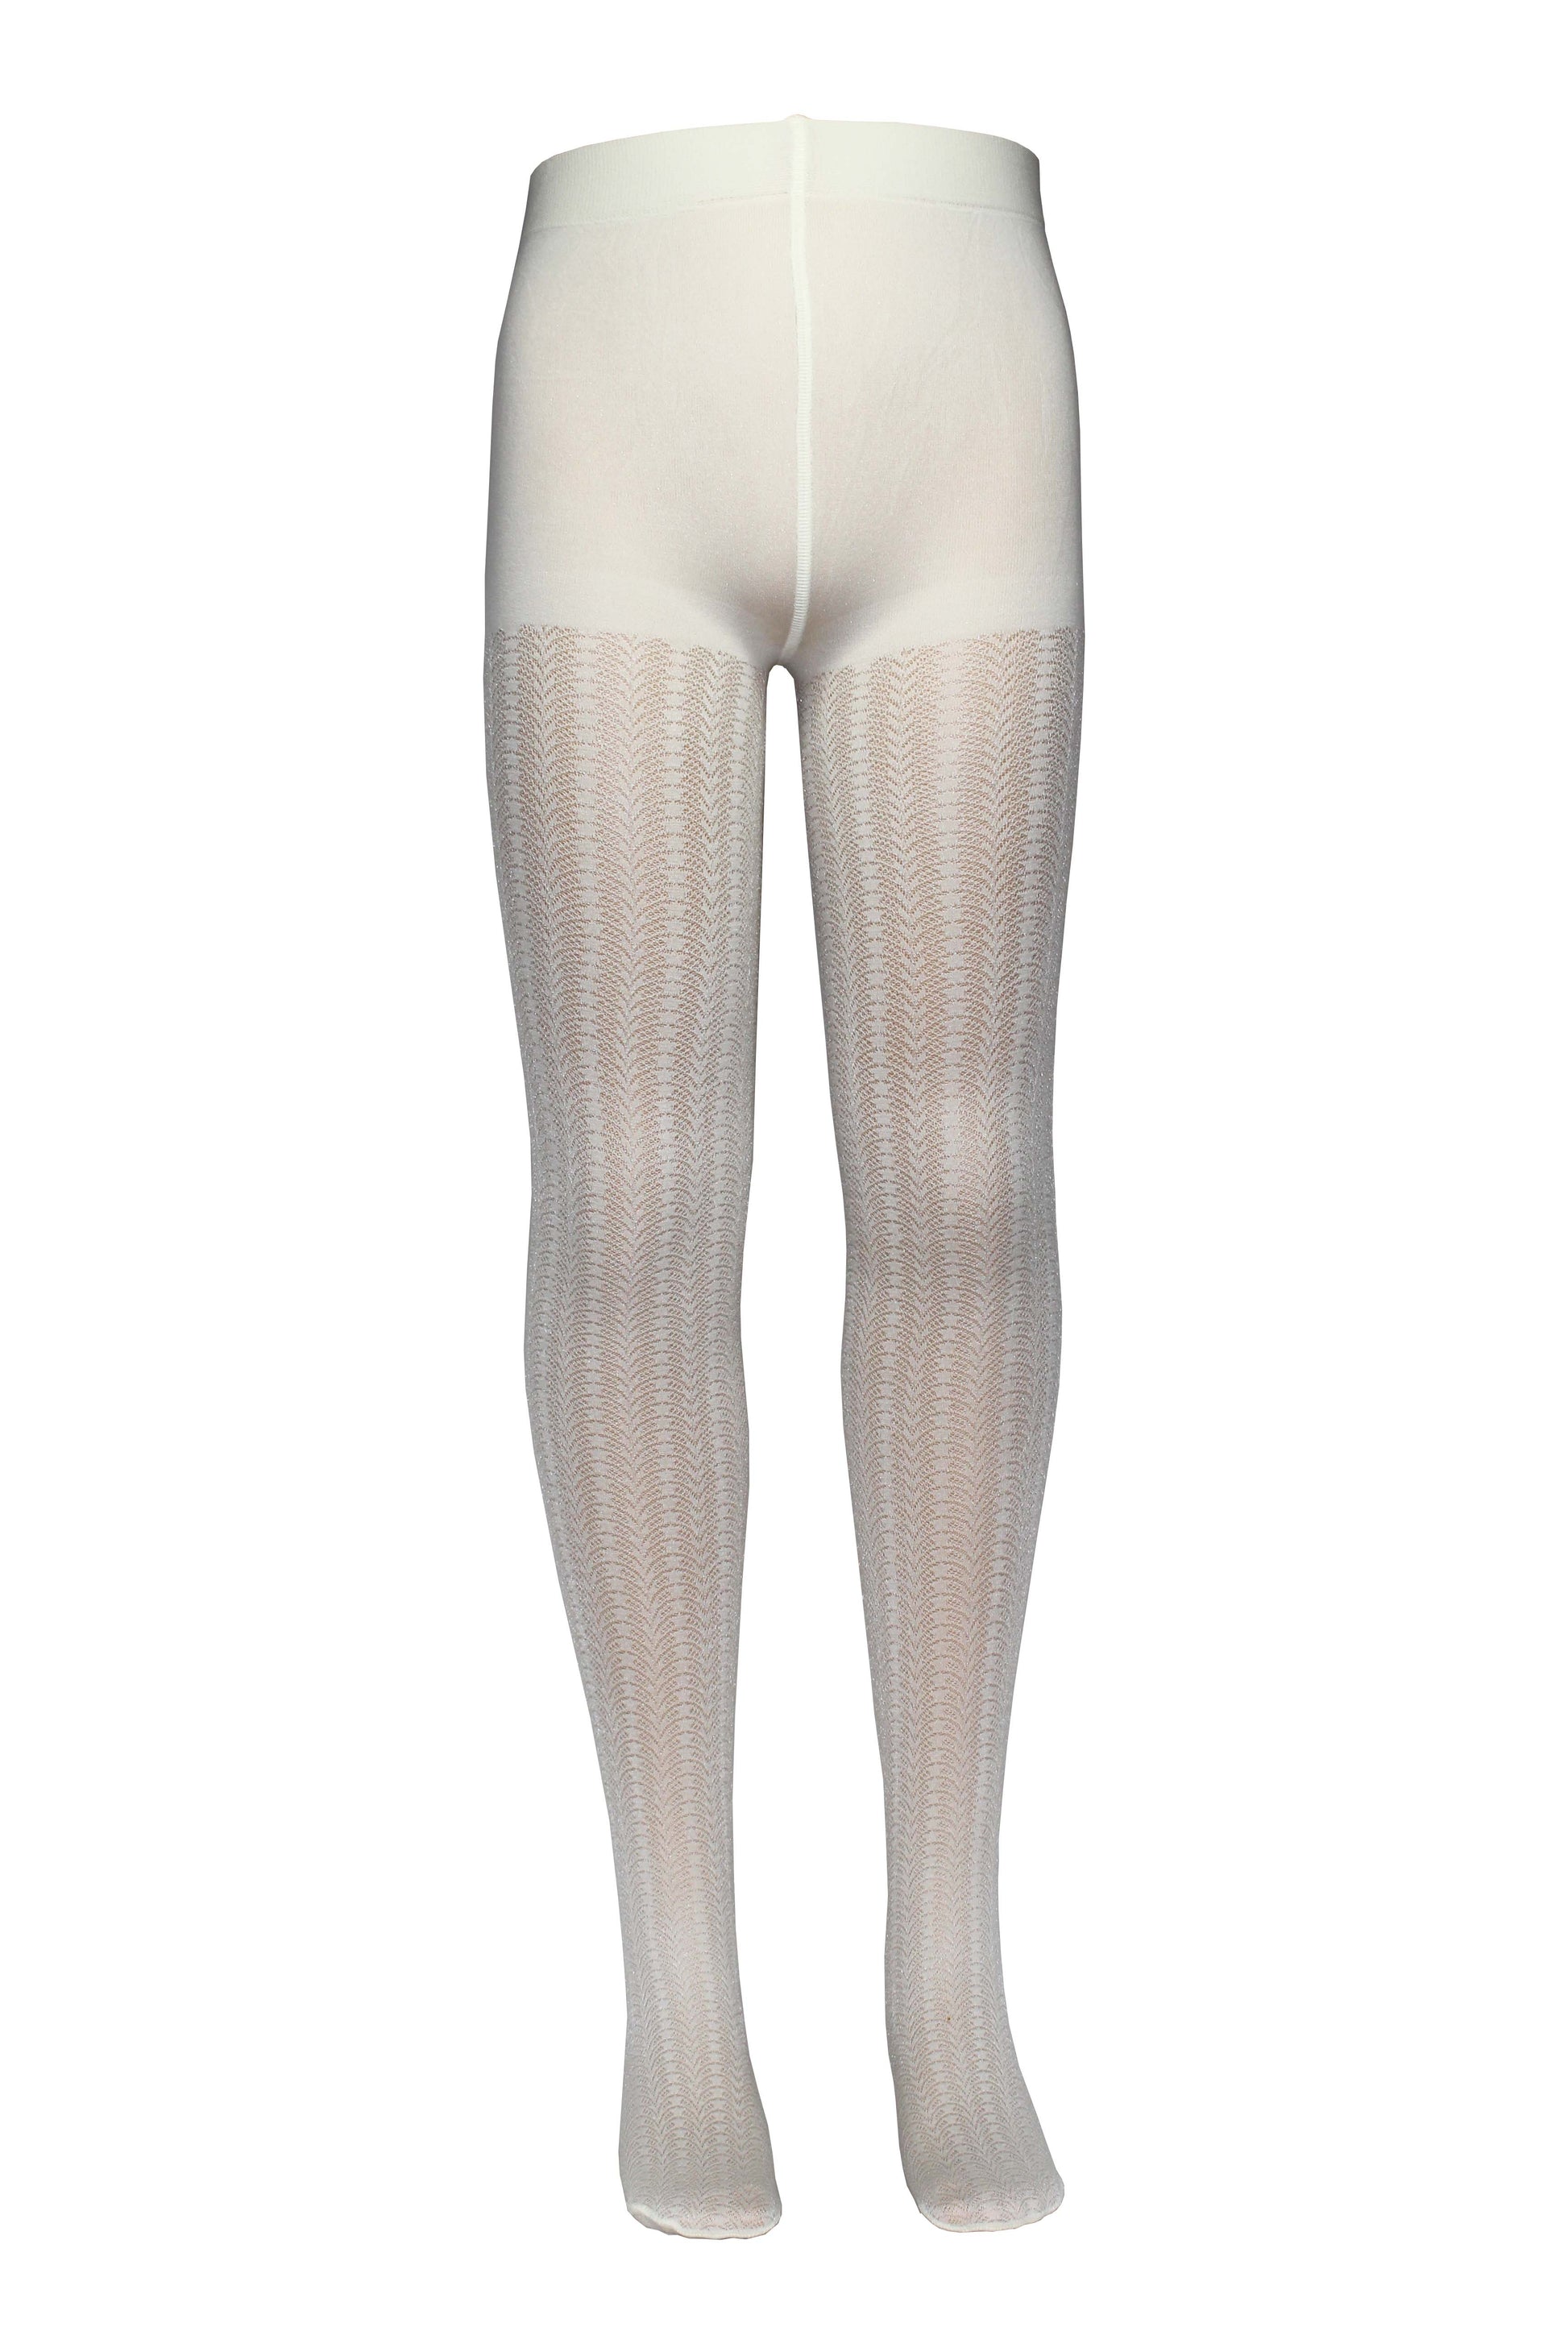 Omsa Serenella Delice Collant - Cream Semi opaque Kid's fashion tights with a woven circular linear lace style pattern.